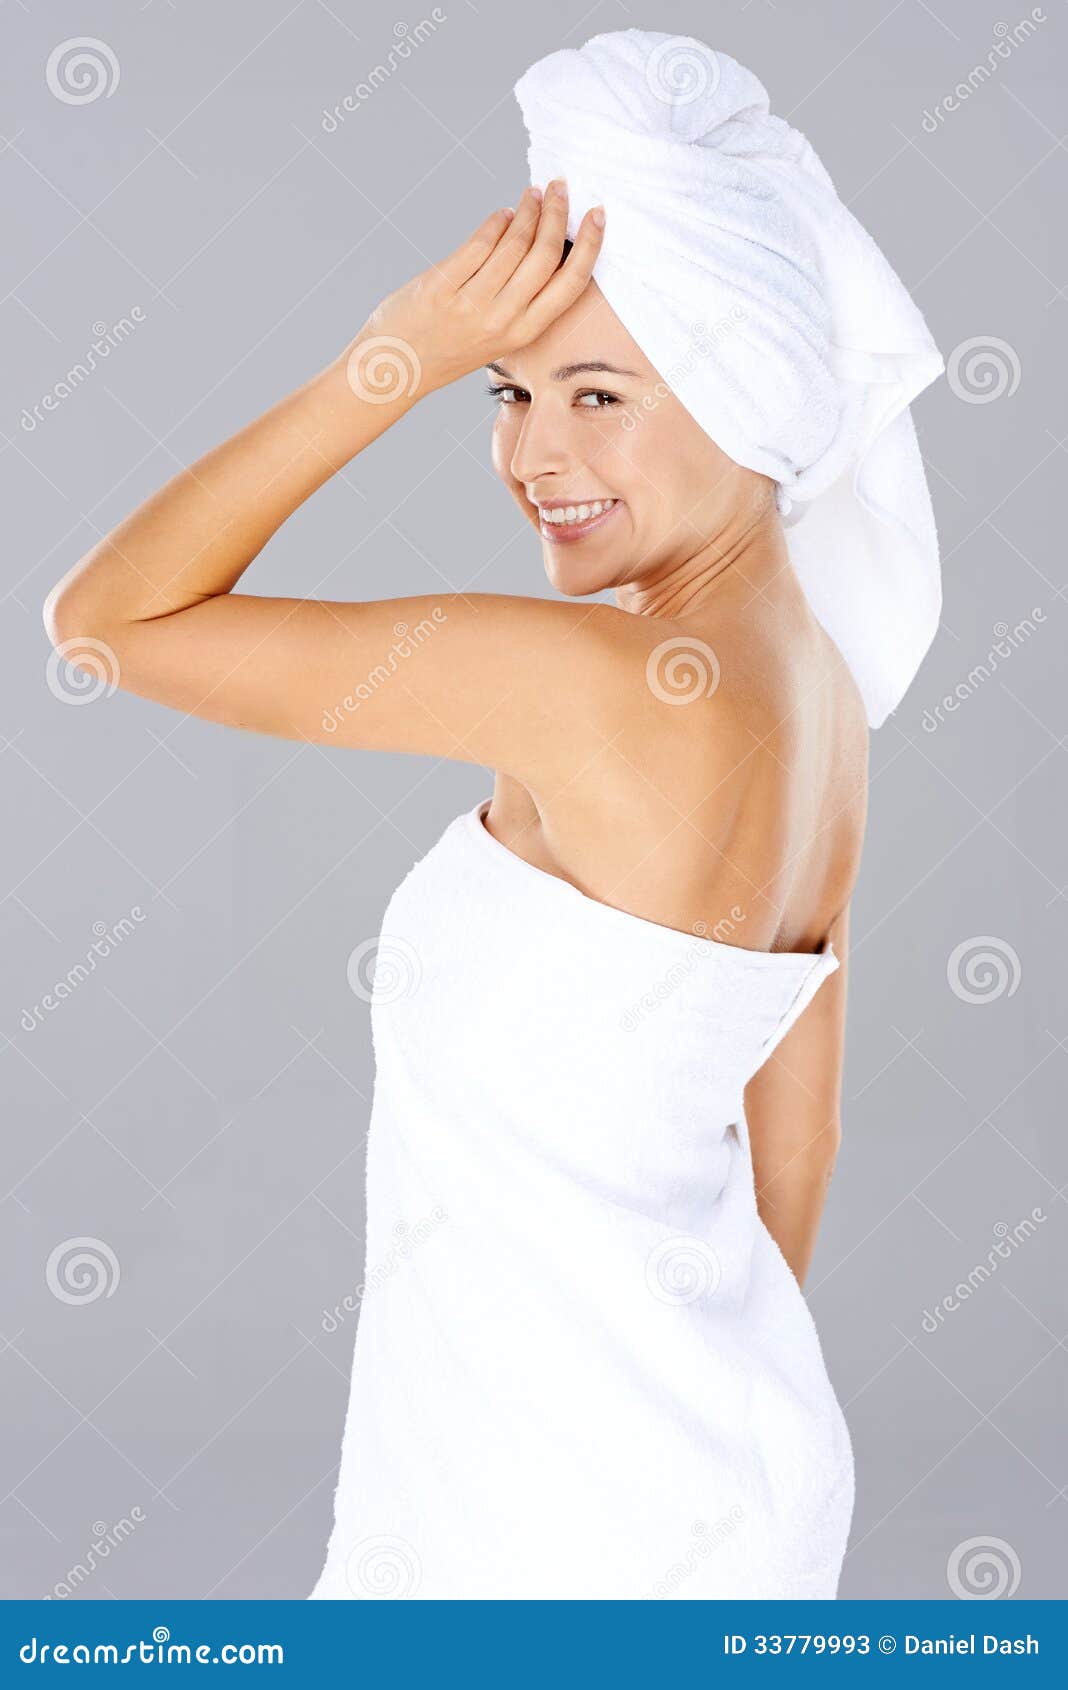 Обернутая полотенцем. Девушка обернутая в полотенце. Девушка завернутая в полотенце. Полотенце для девочек. Девушка замотанная в полотенце.